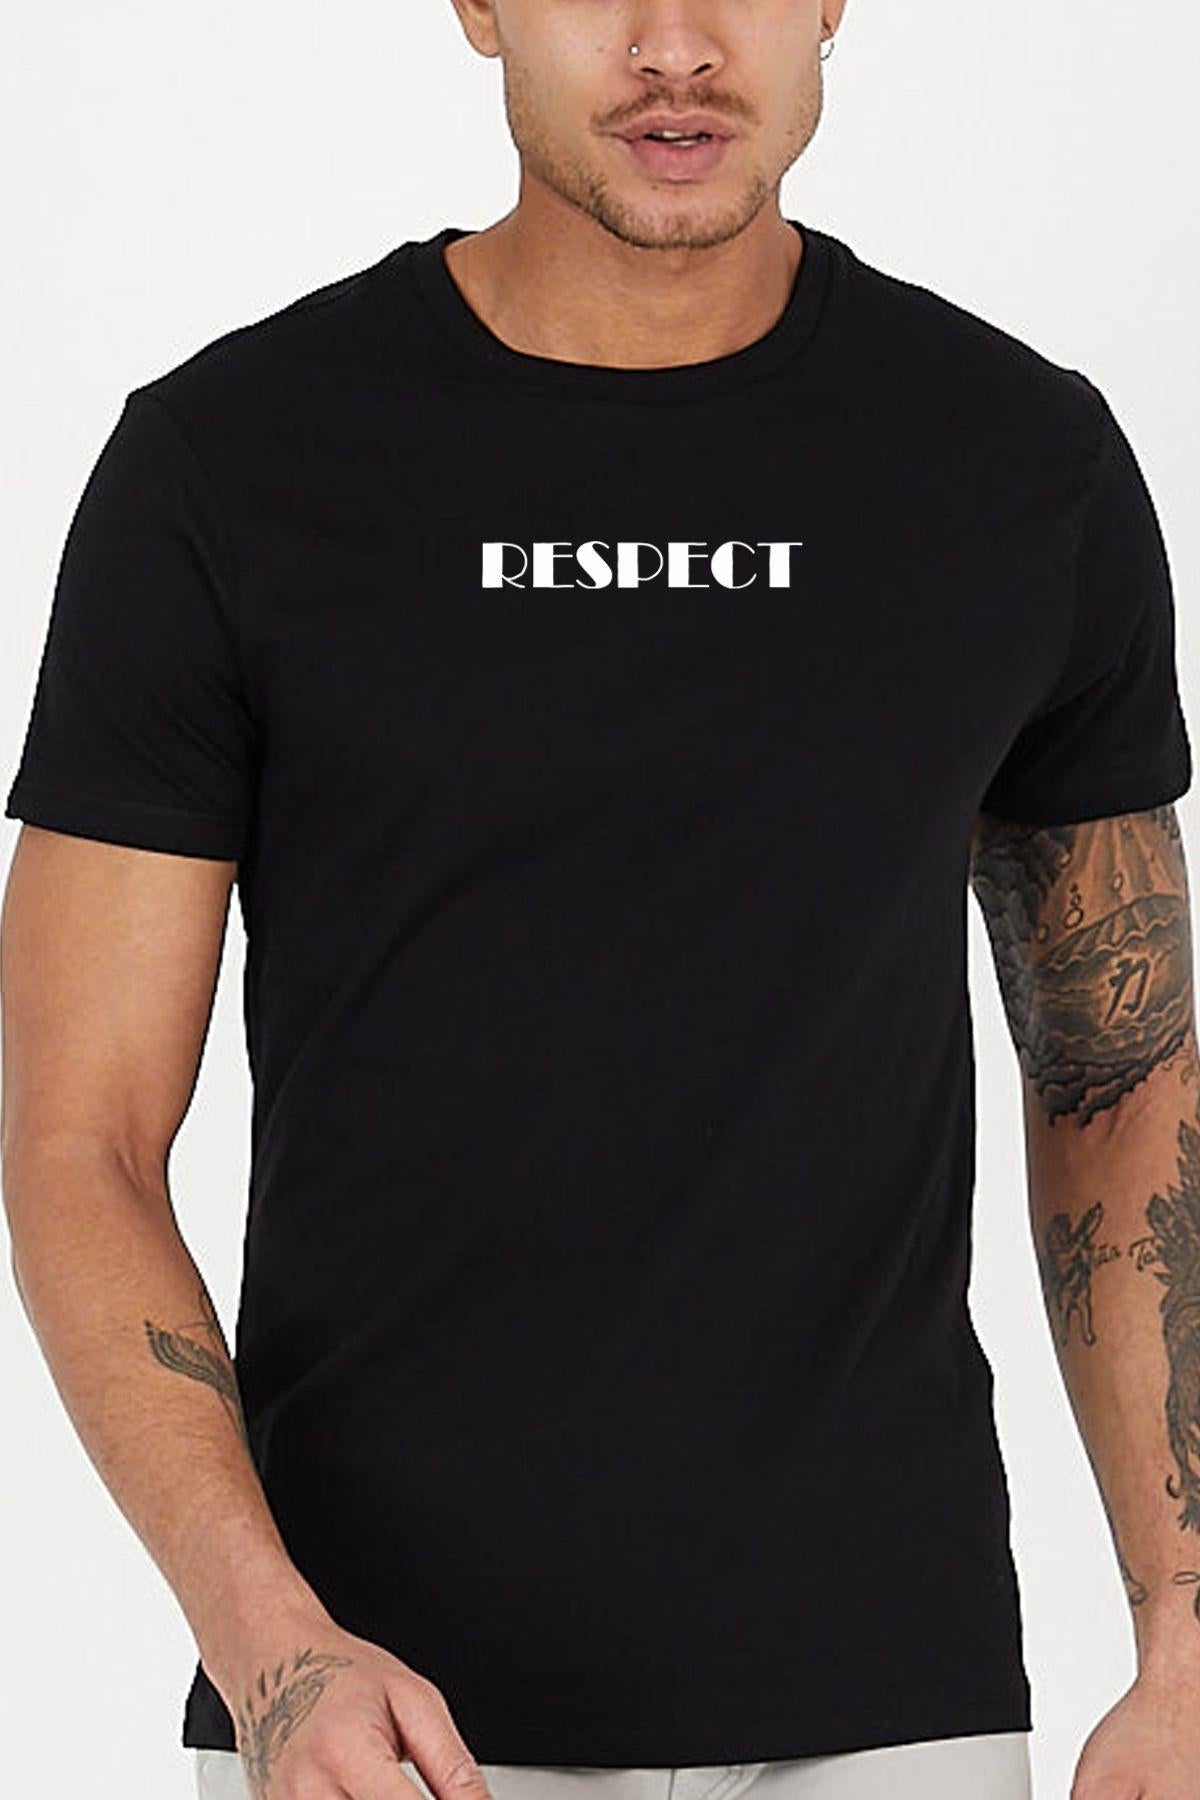 Respect slogan printed Crew Neck men's t -shirt